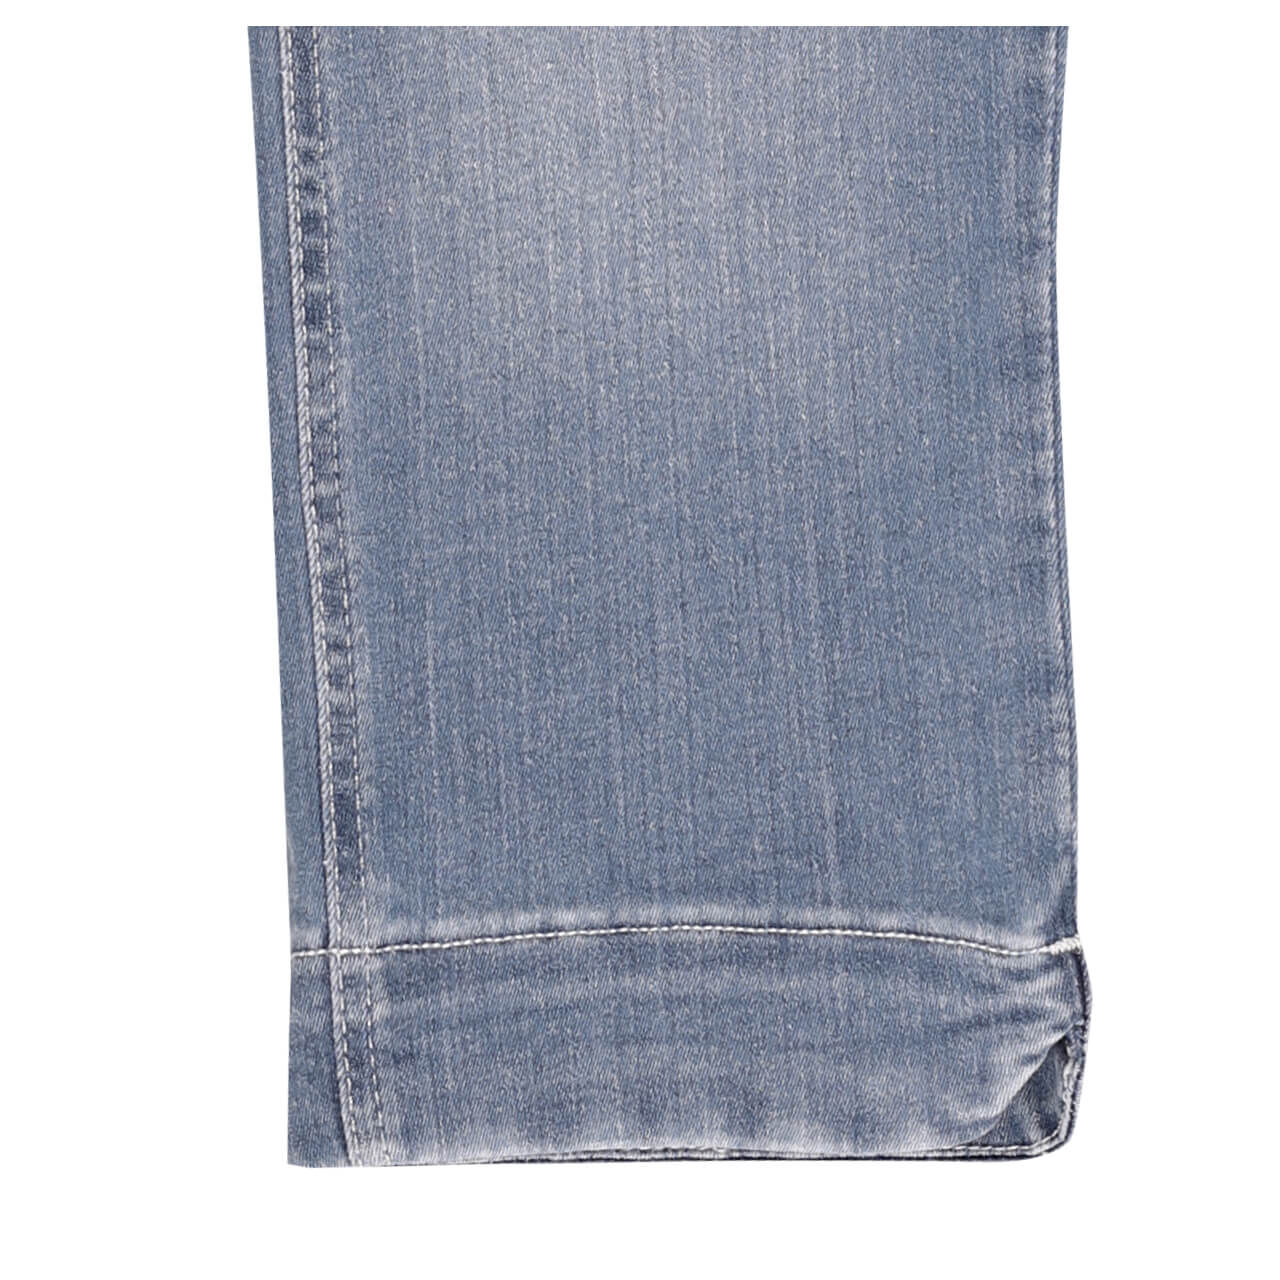 MAC Dream Capri 3/4 Jeans light blue wash